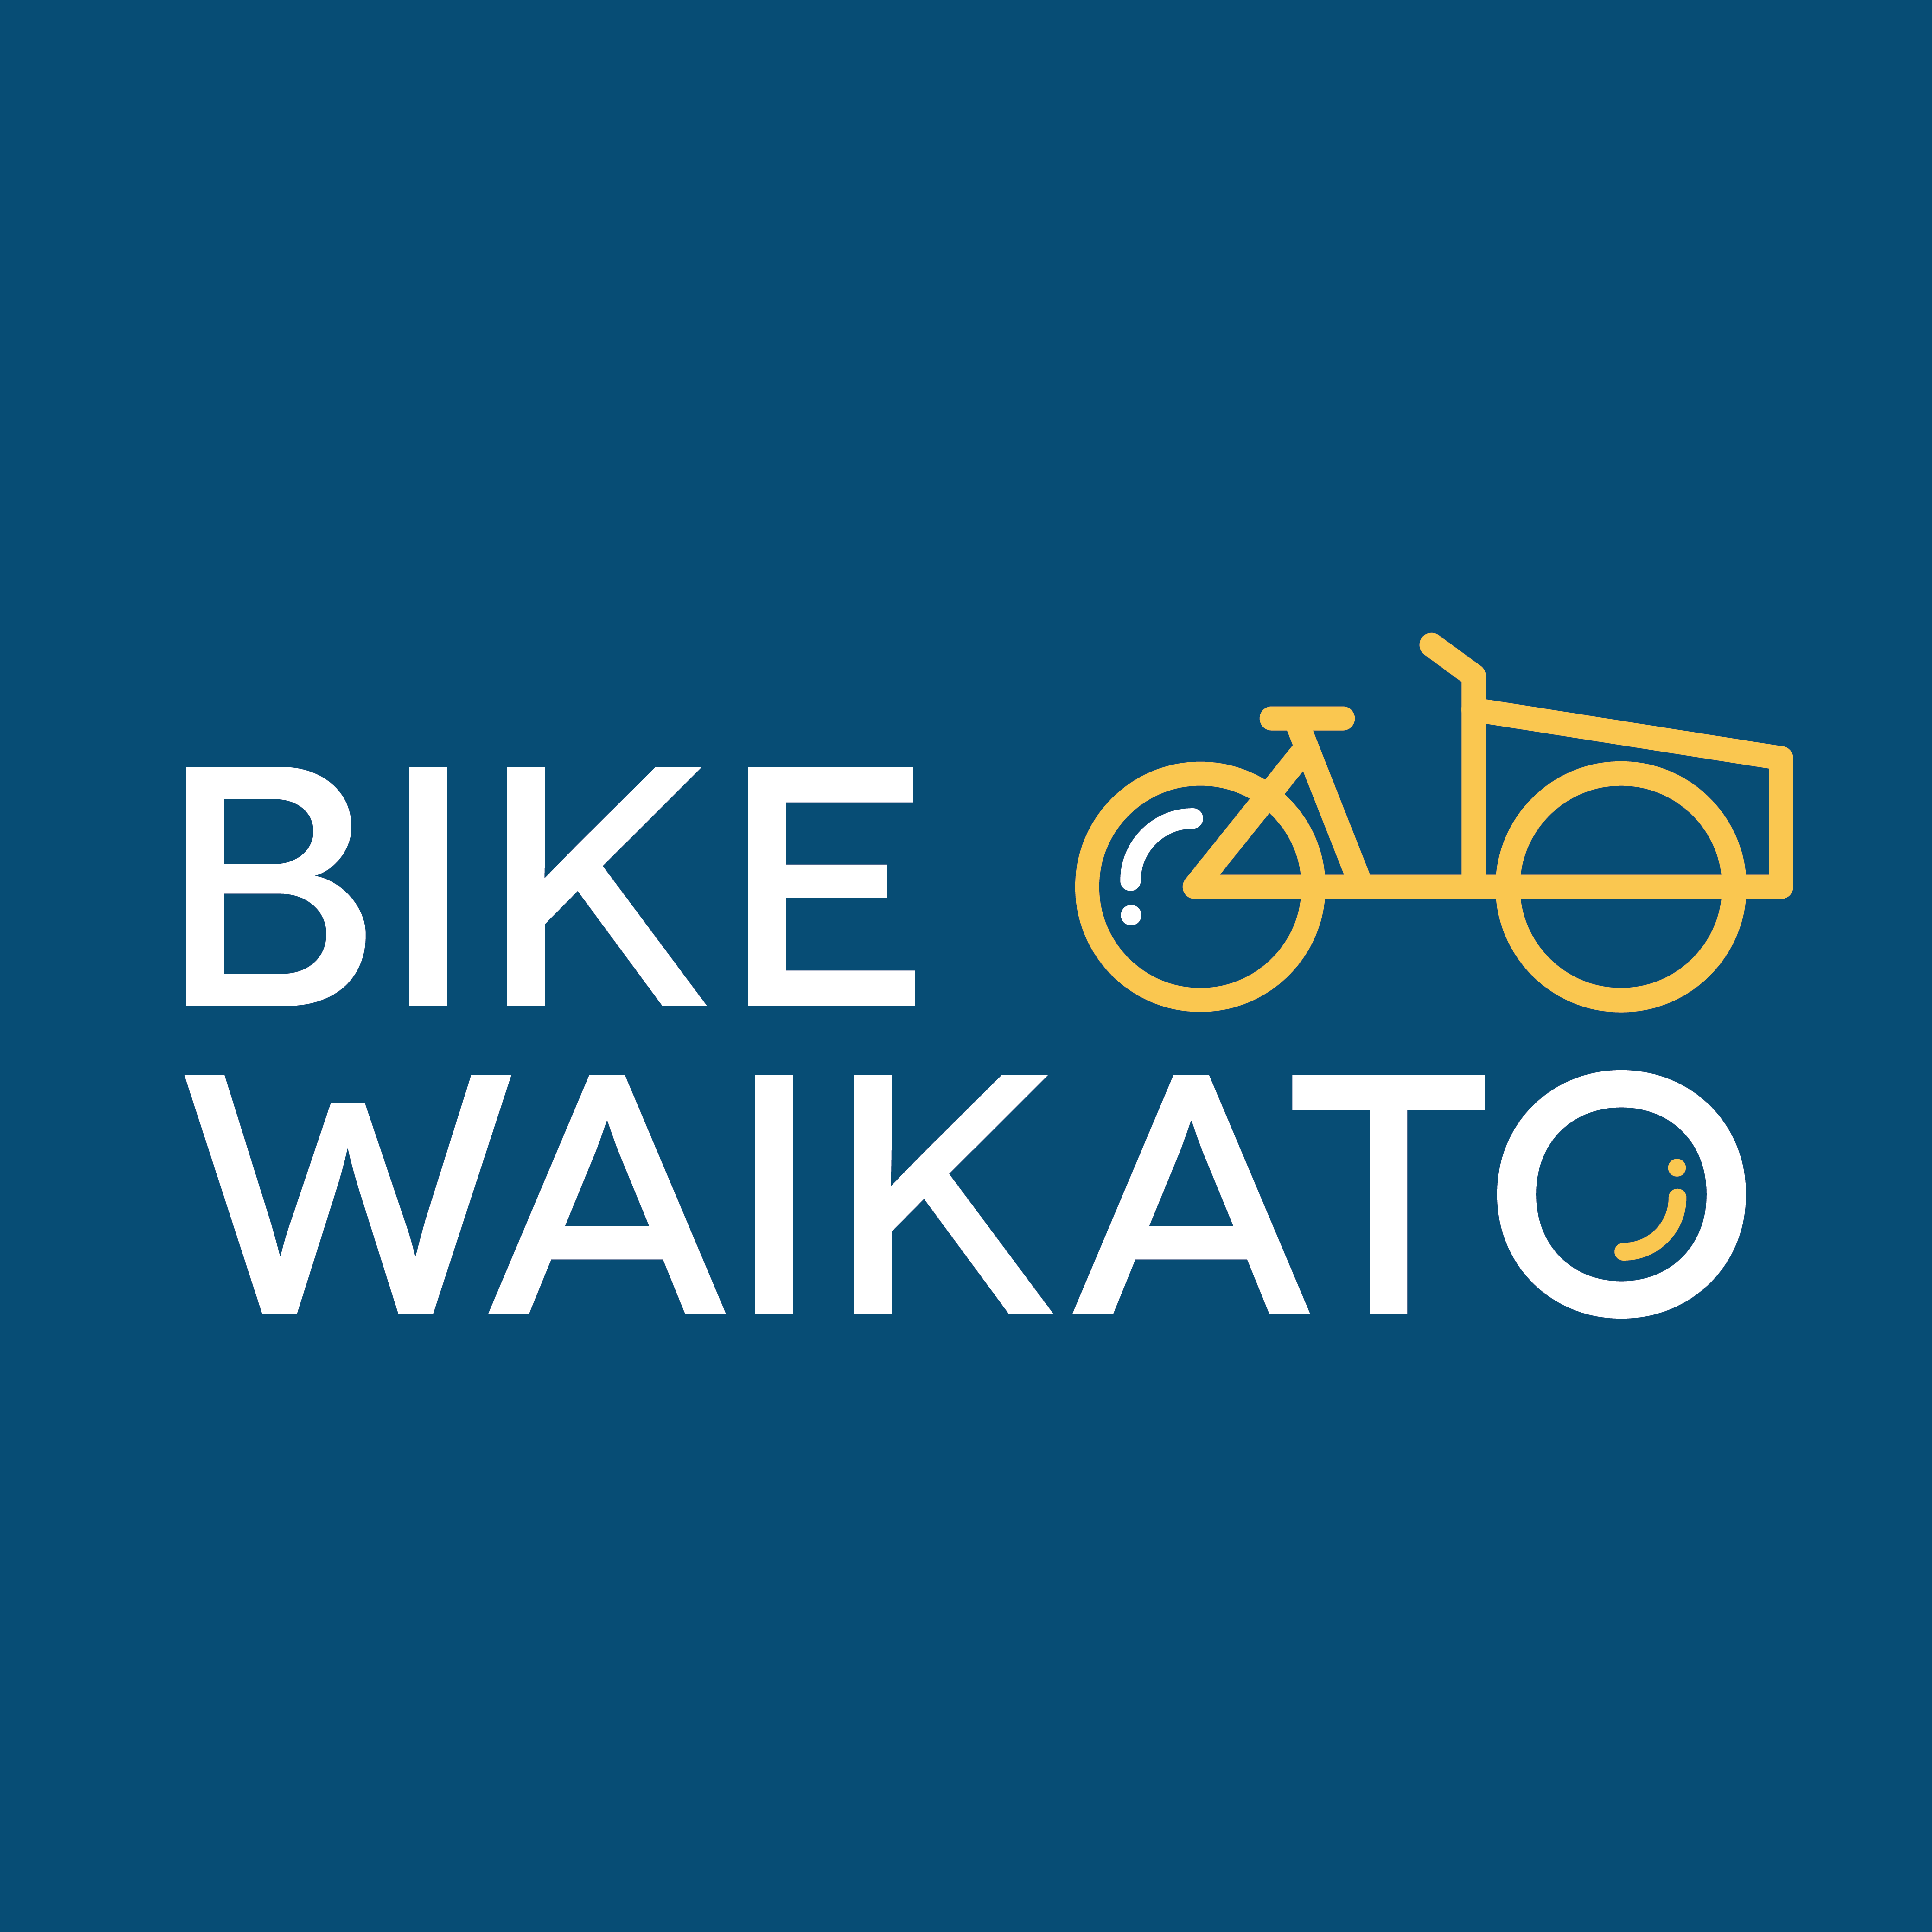 Bike Waikato logo featuring a yellow bakfiets style bike